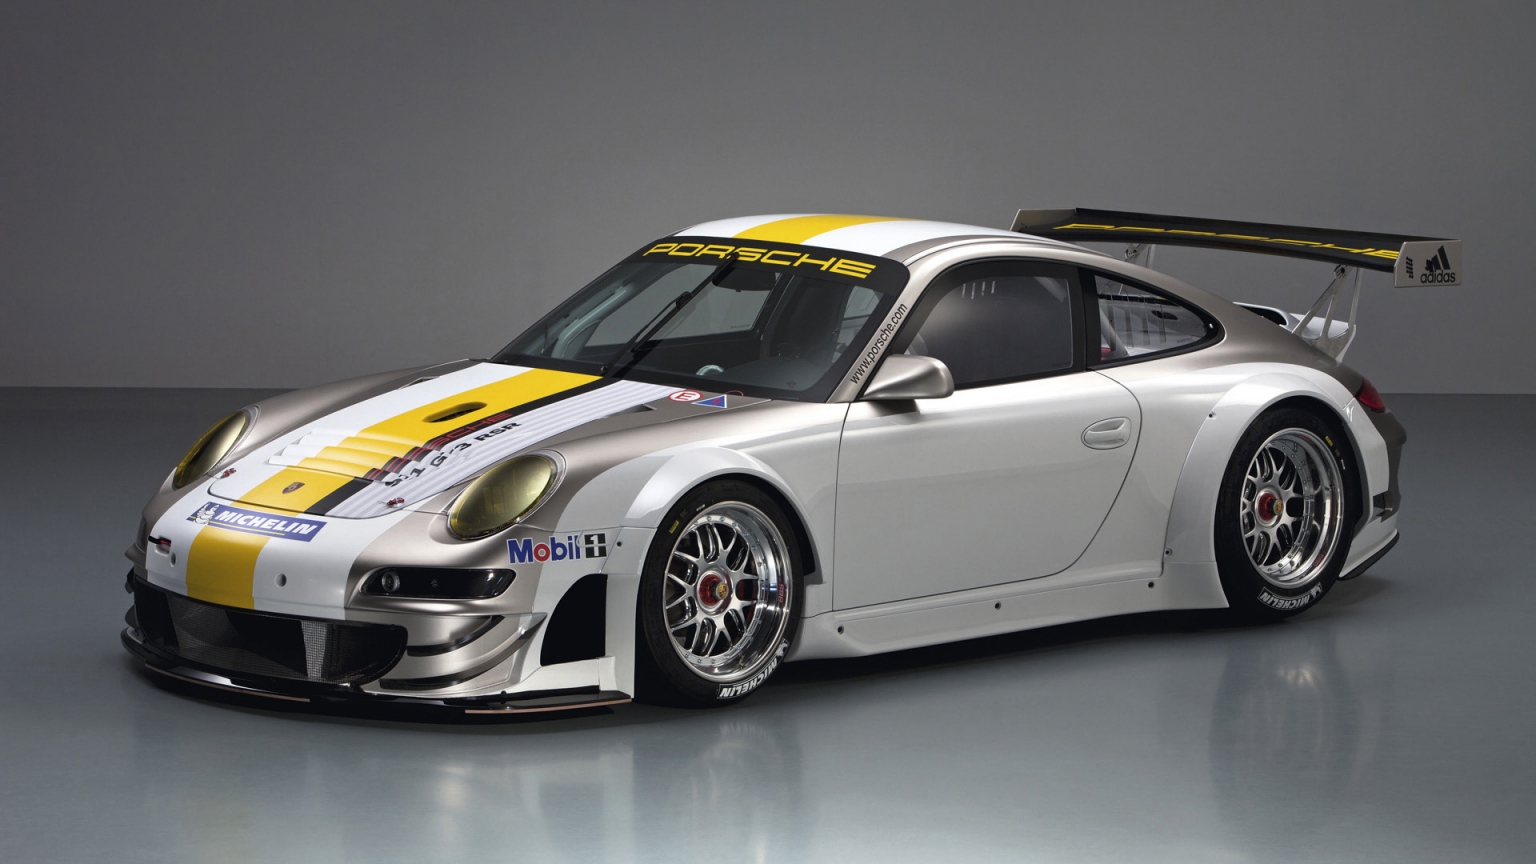 Porsche 911 GT3 RSR Studio for 1536 x 864 HDTV resolution